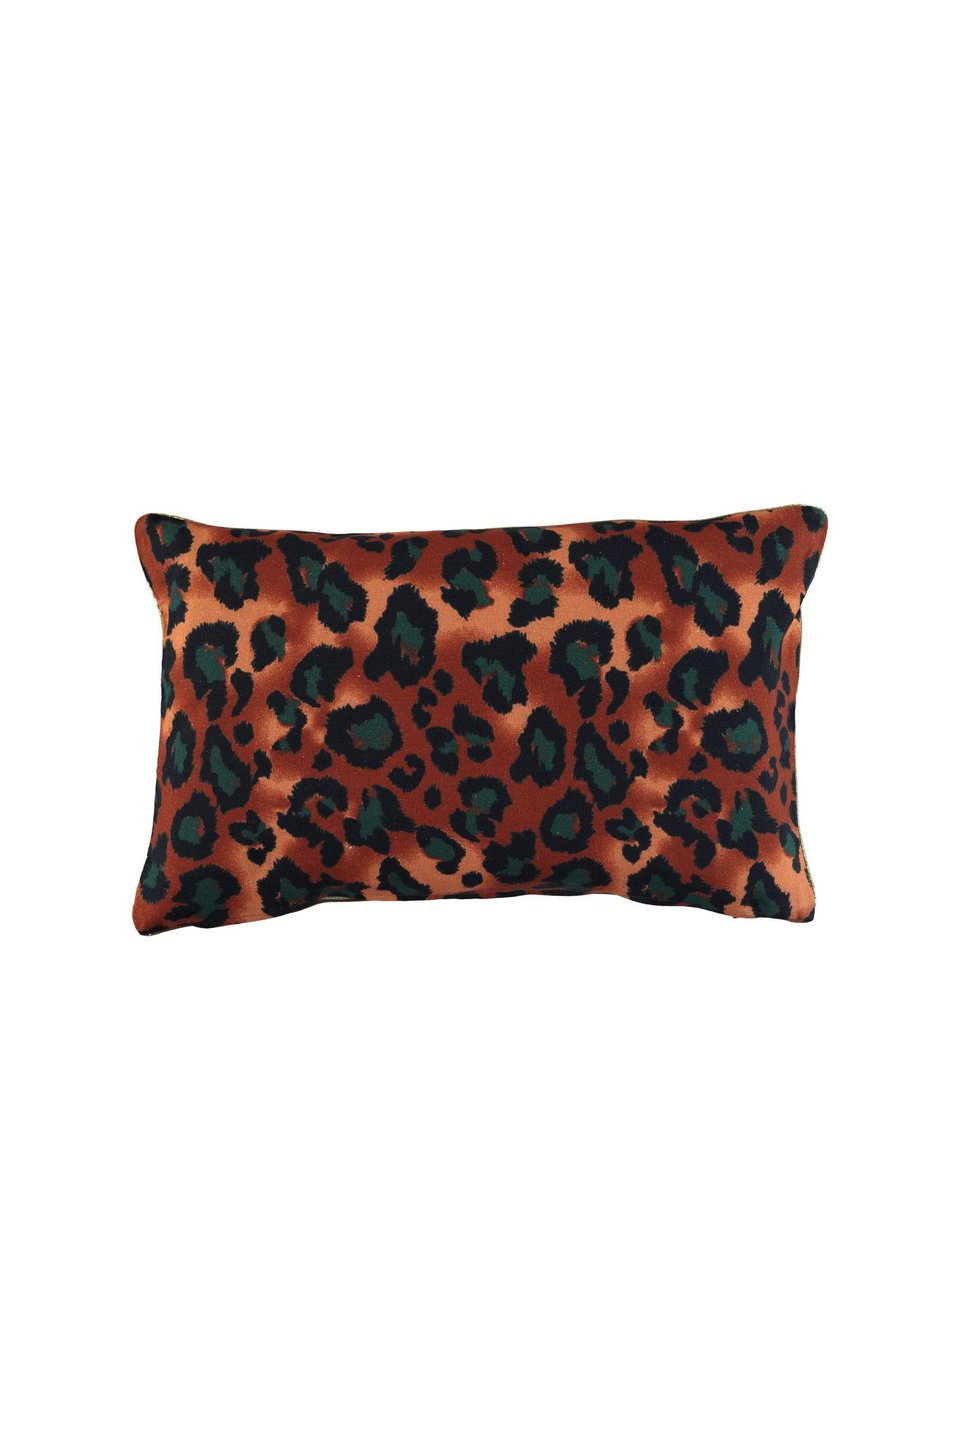 Horses & Leopard Print Cushion - Green - 60x40